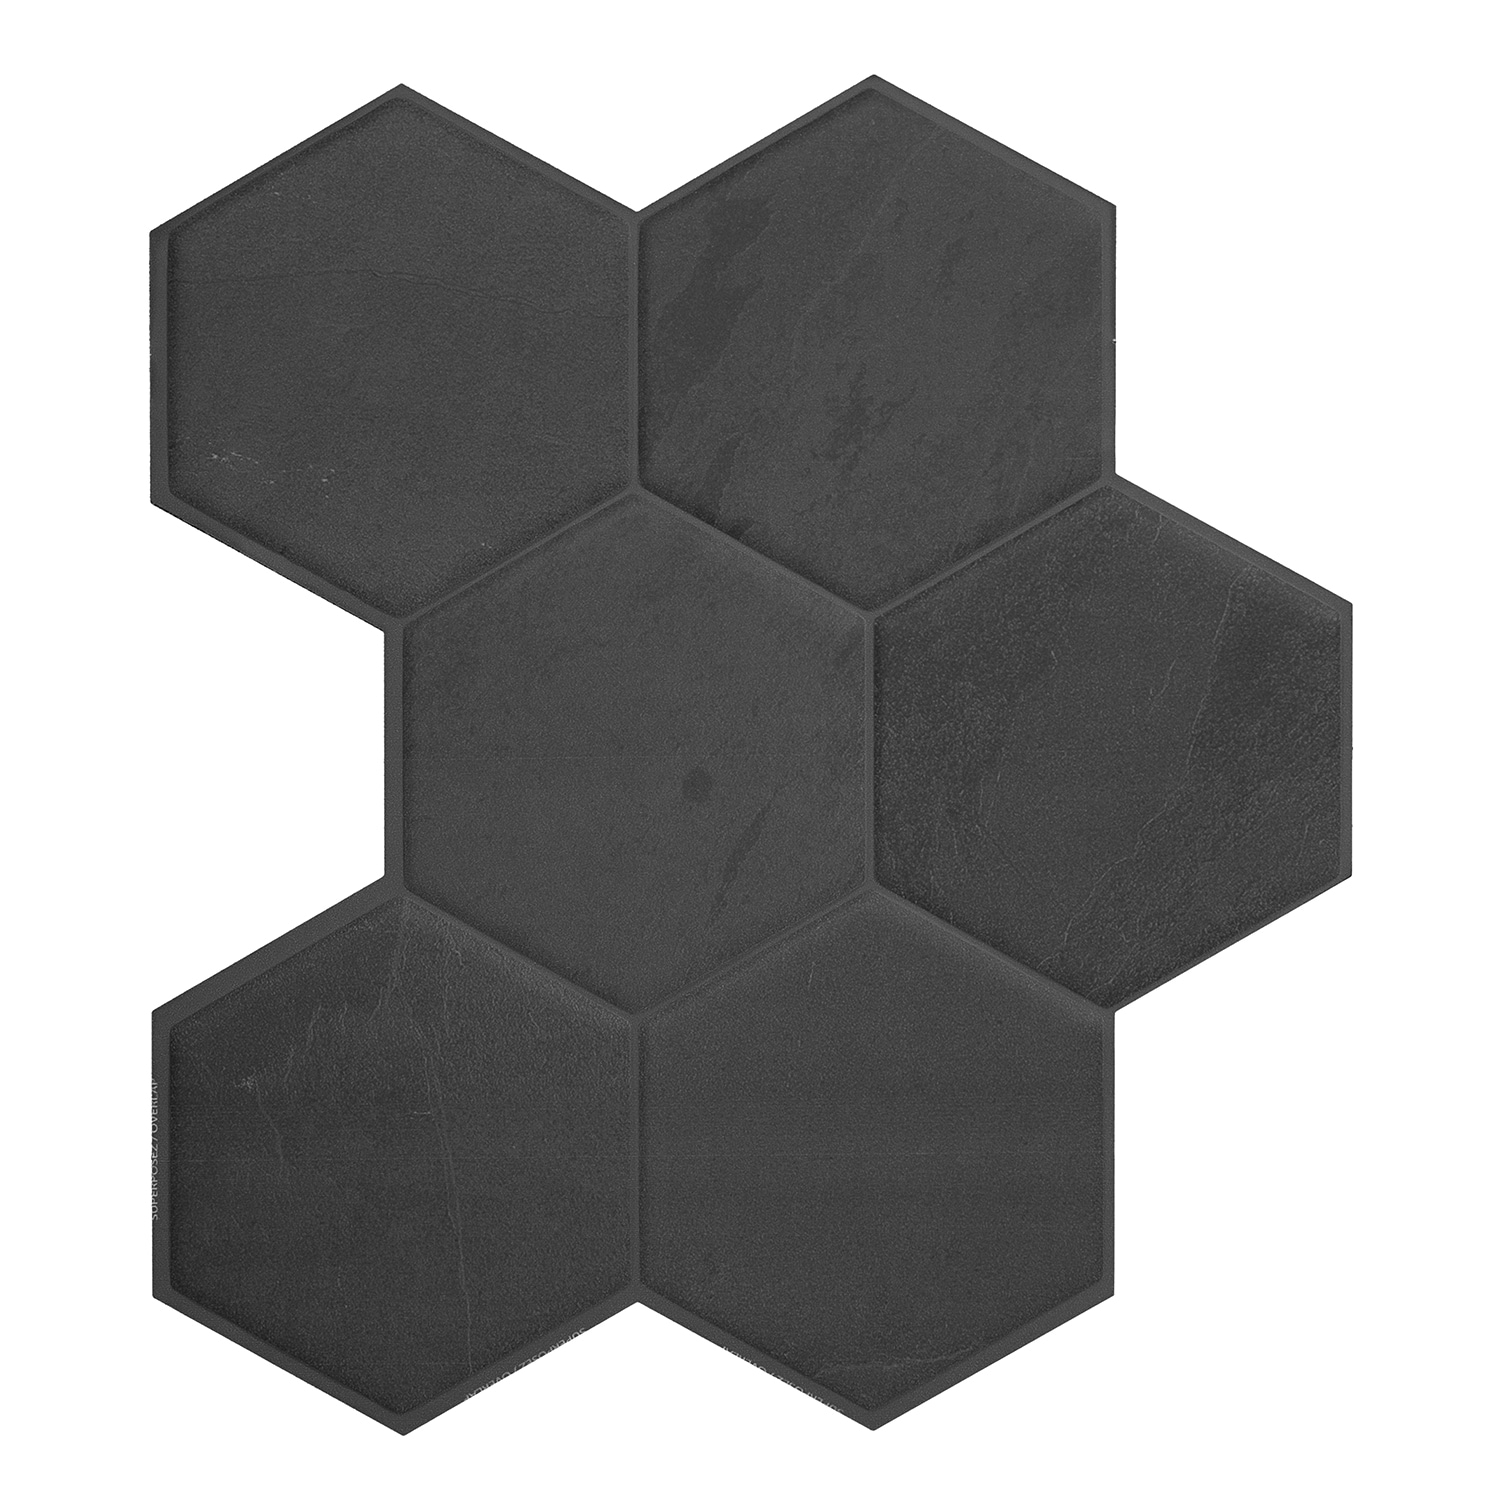 4Pack Self Adhesive Patterned Wall Tiles Hexagon,Diamond,Giltter Mosaic,Brick 